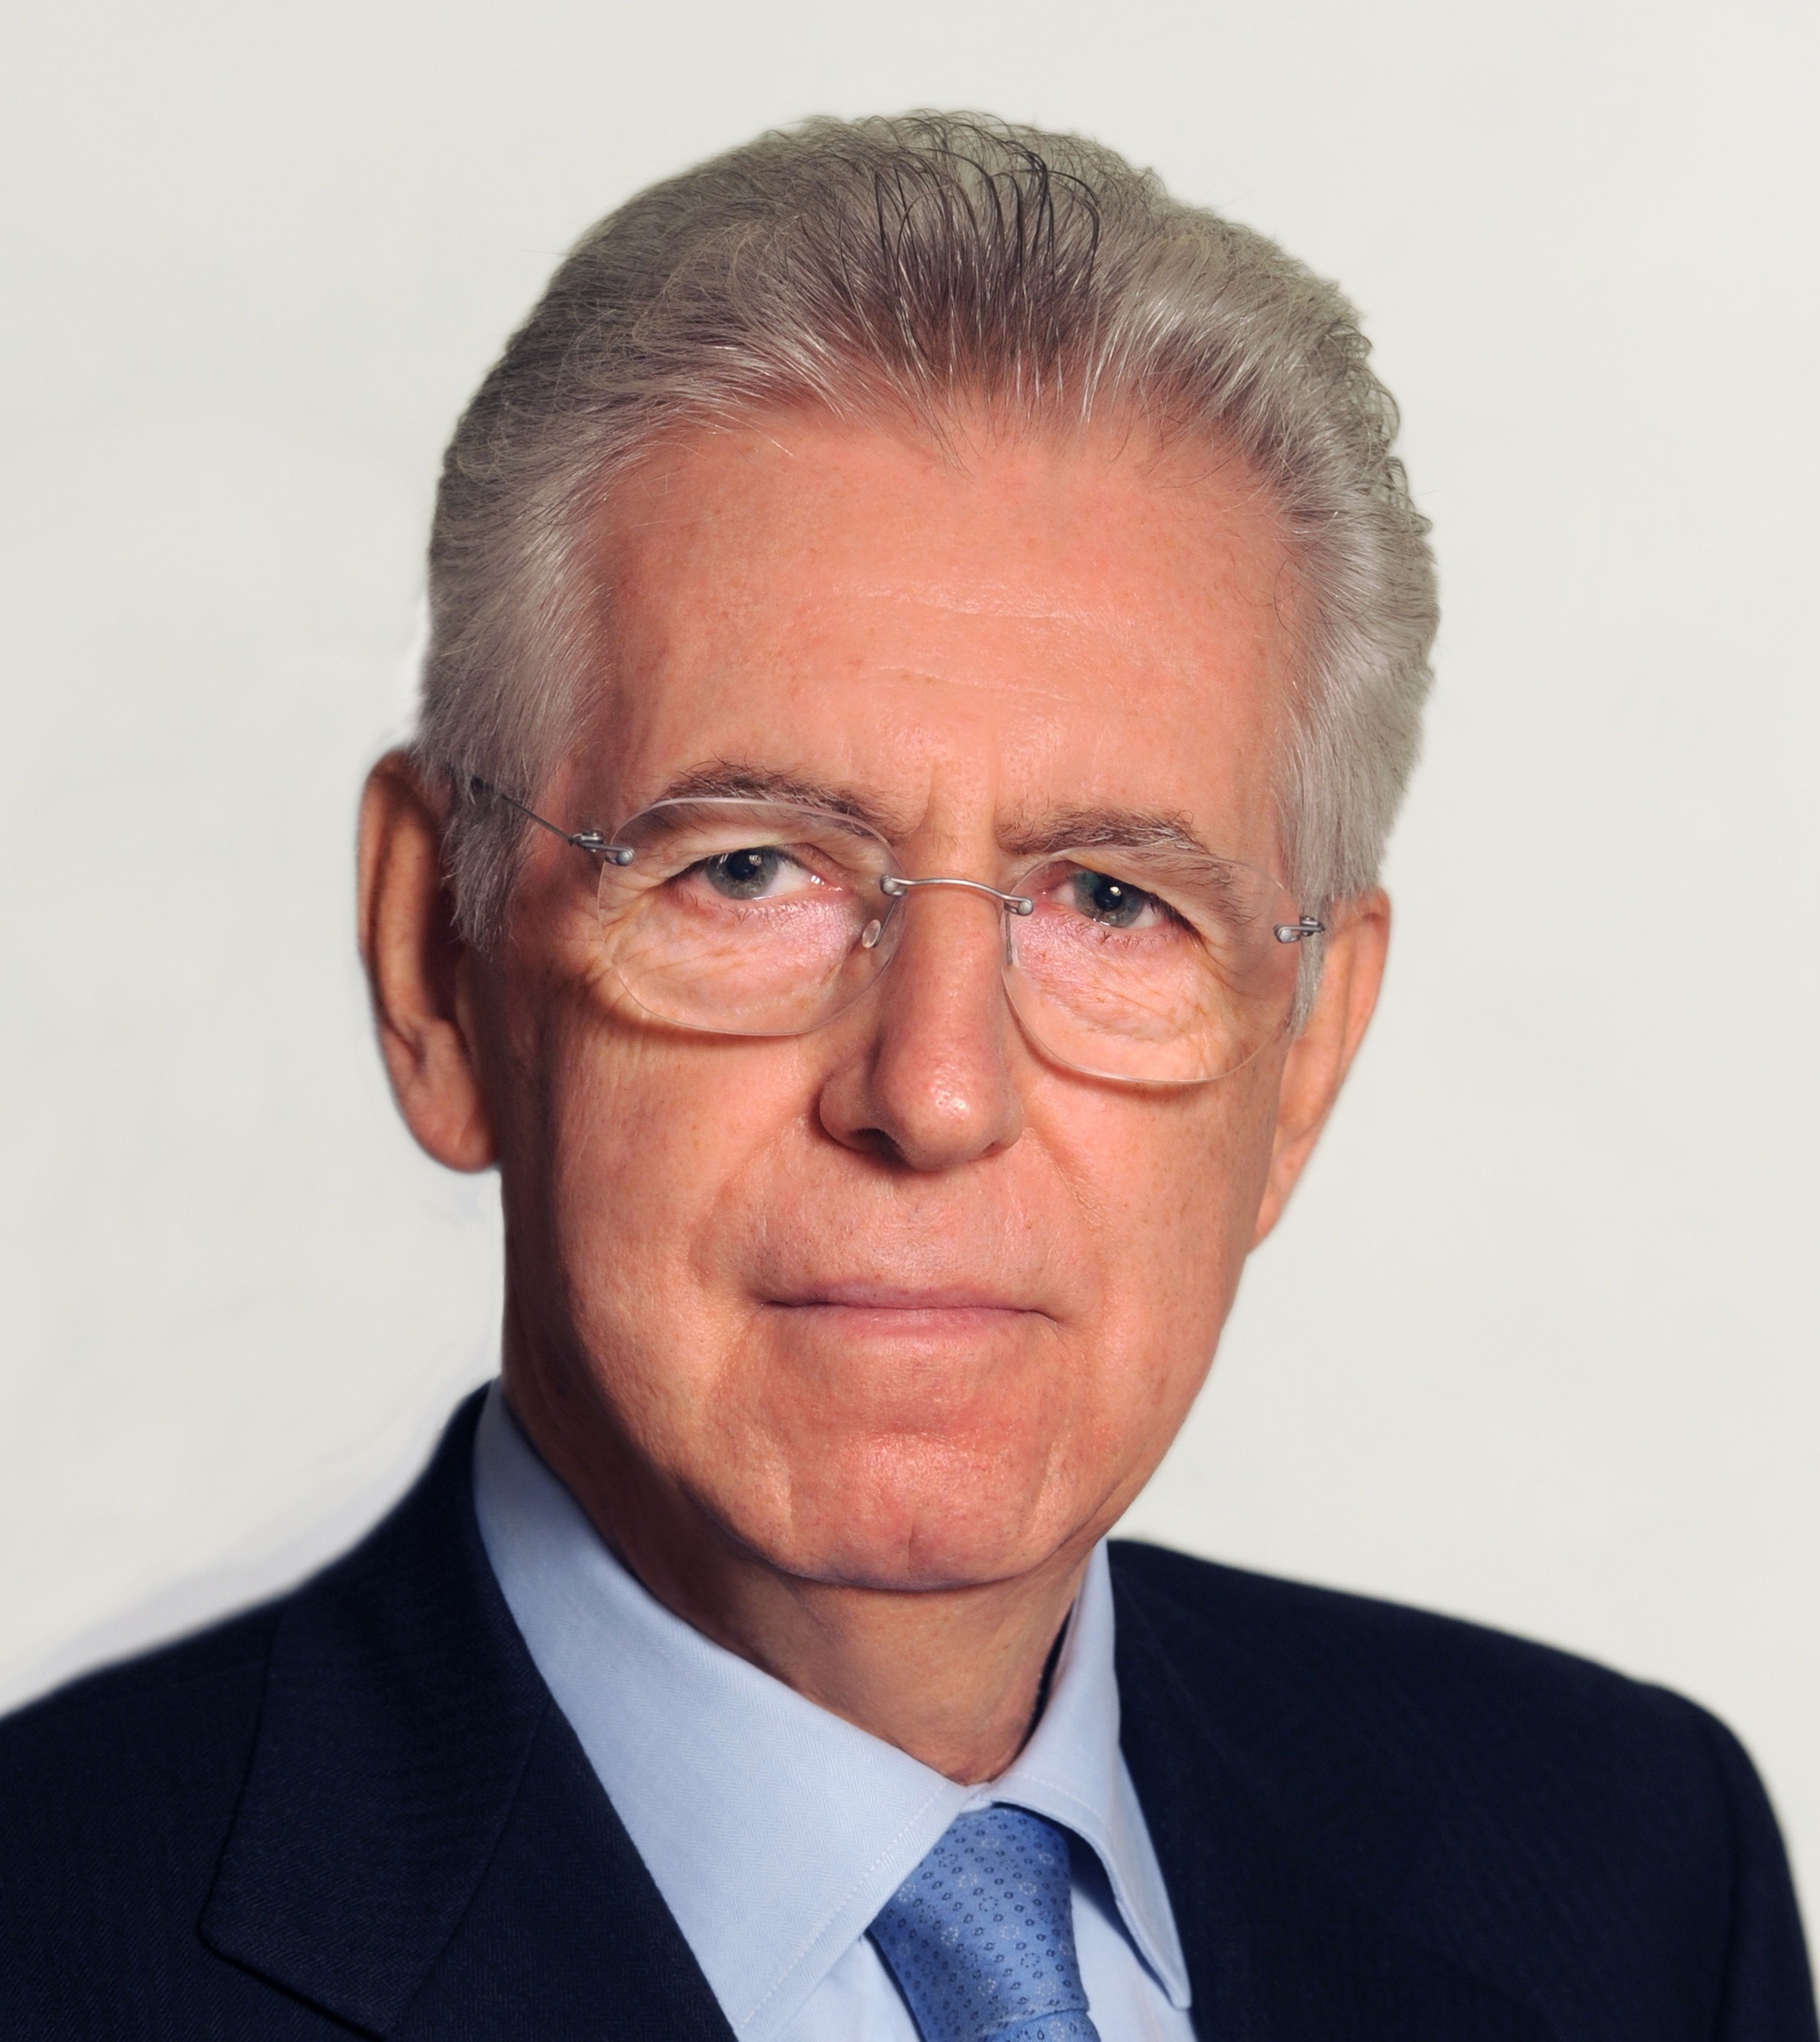 Hon. Mario Monti